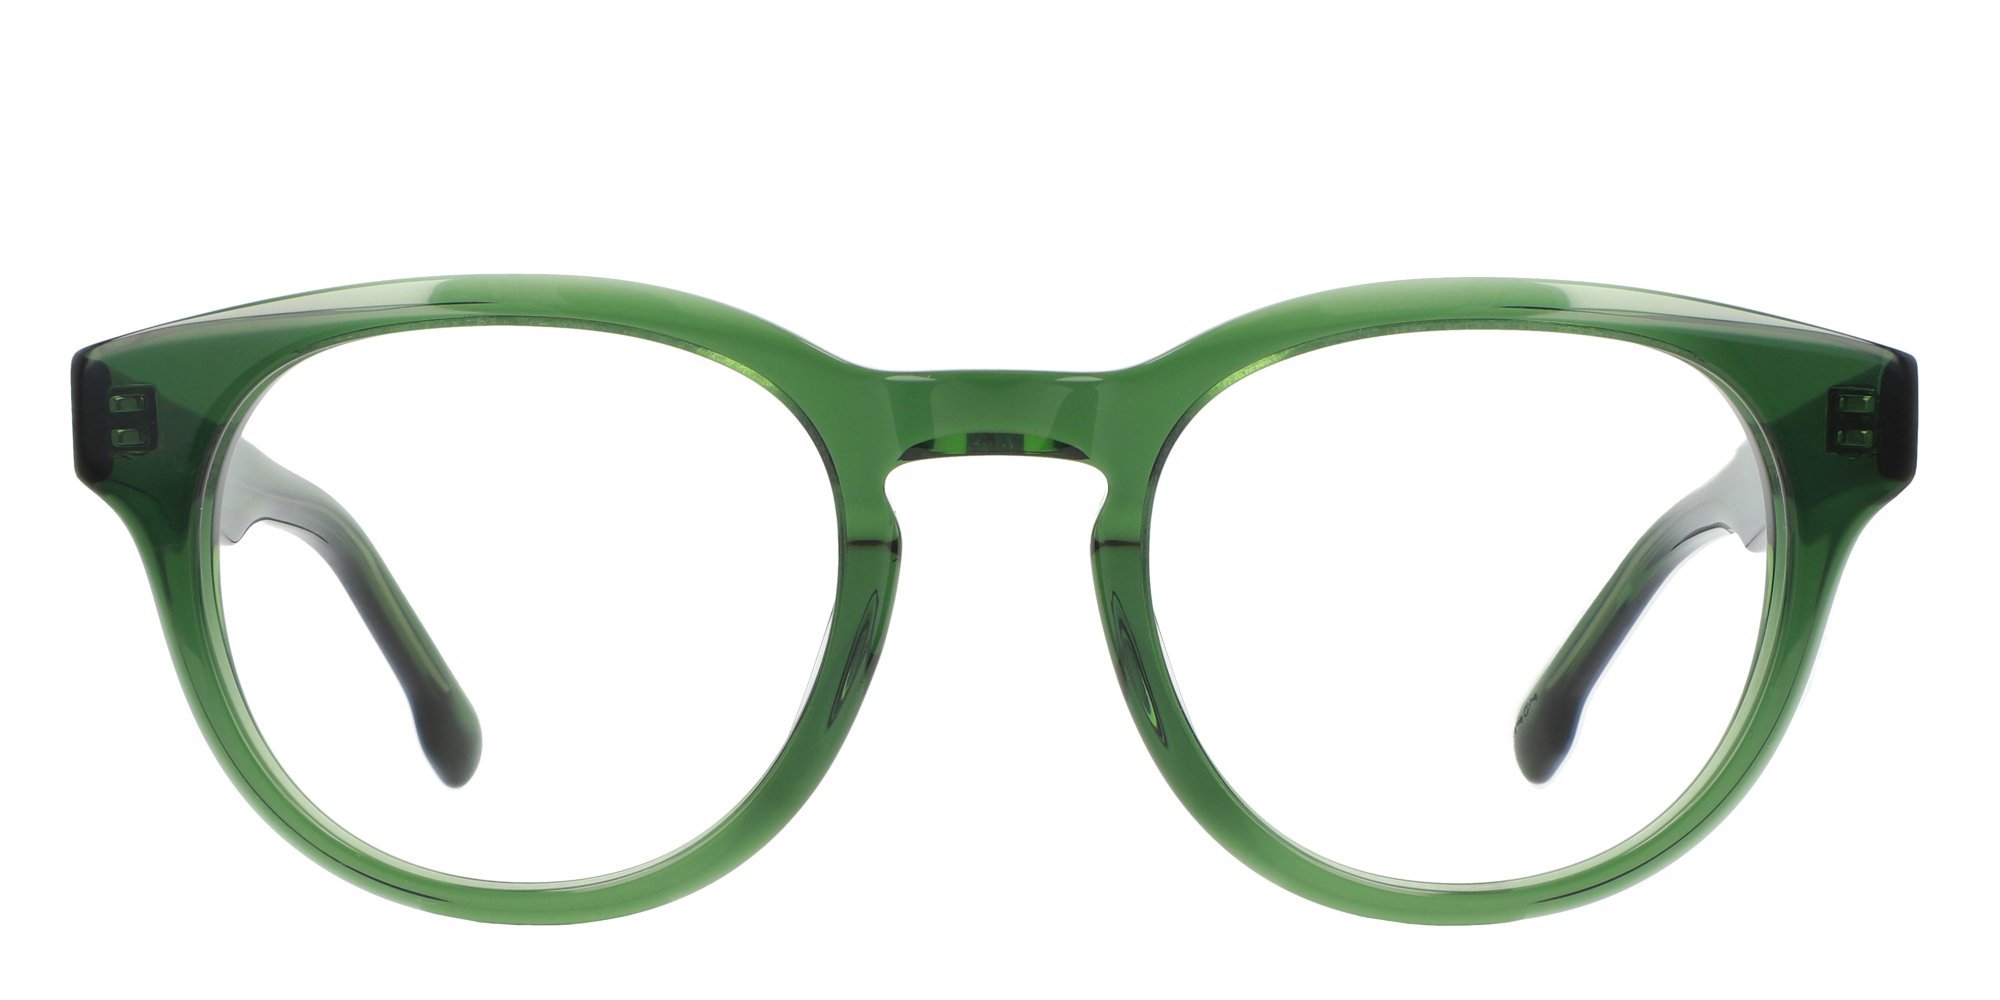 Bifocals Archives - David Green eyewear - look good with nature